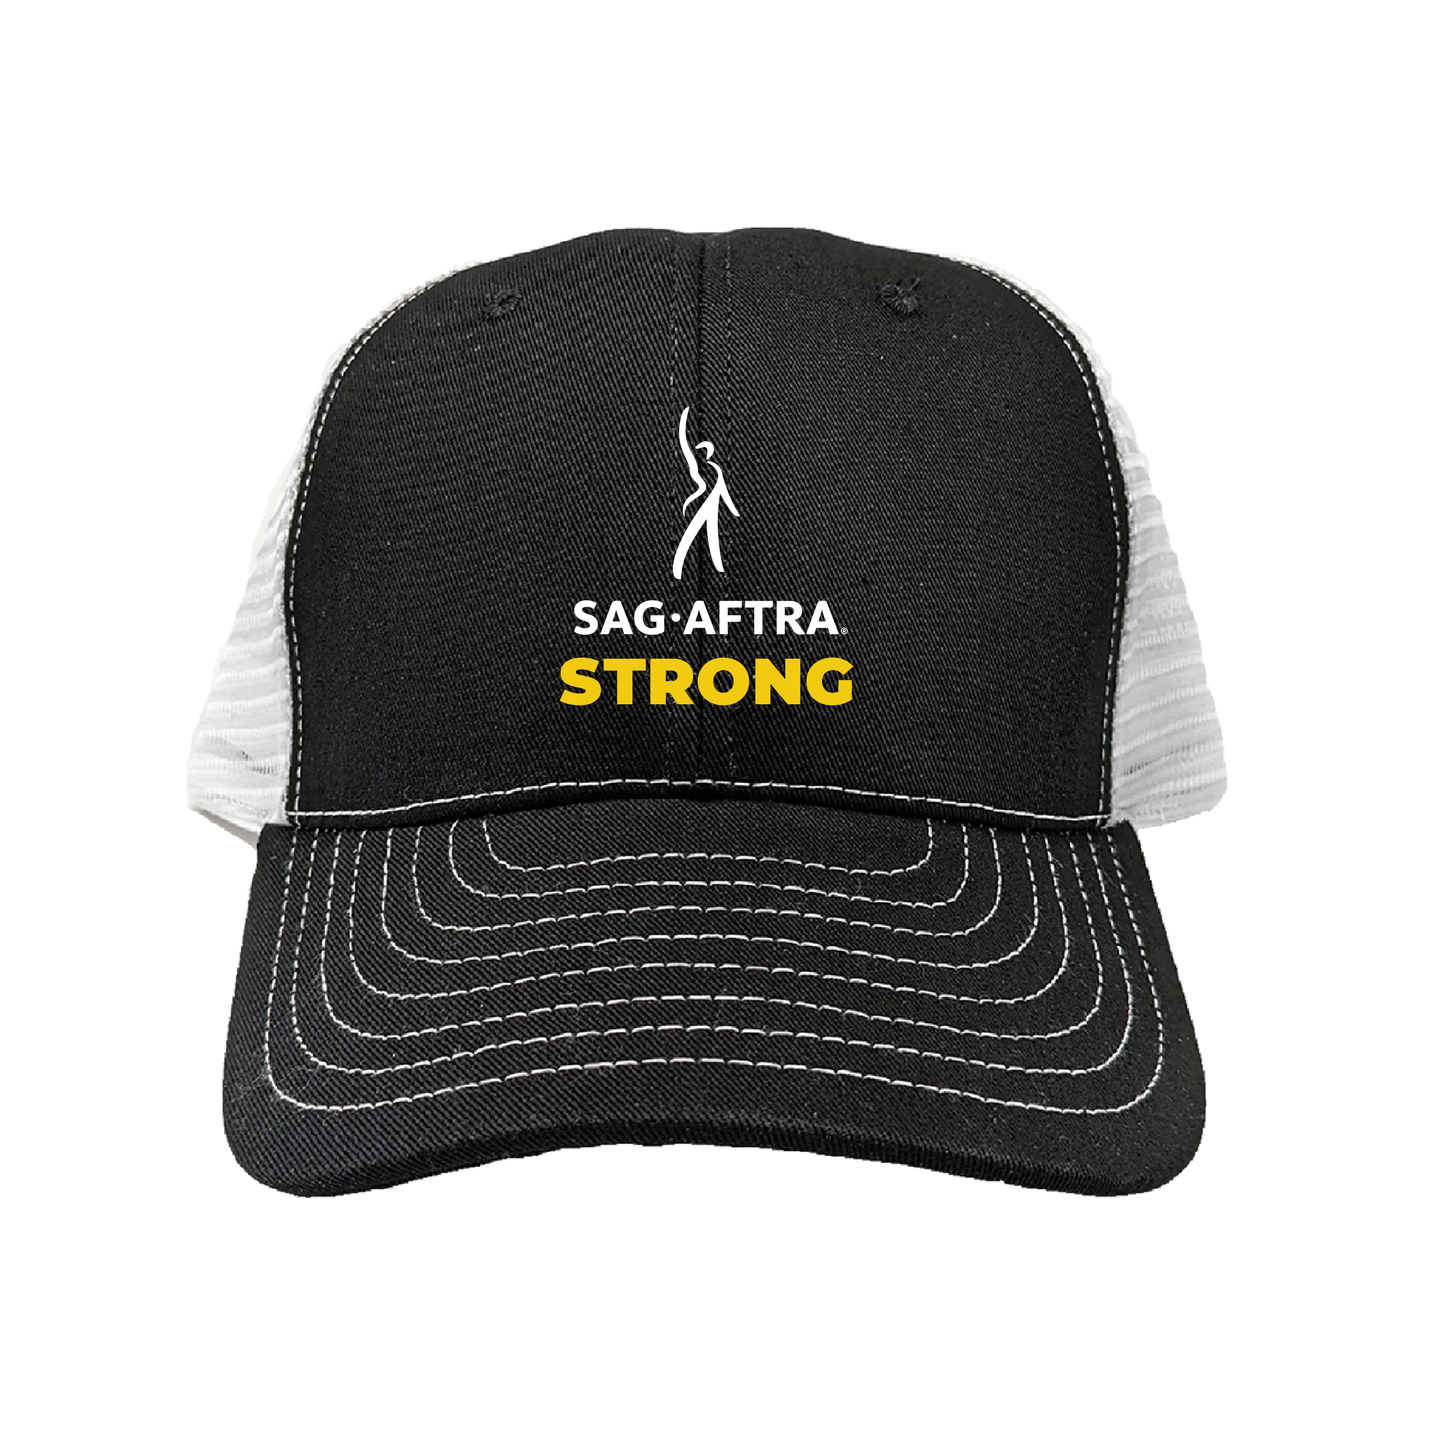 SAG-AFTRA STRONG Trucker Hat